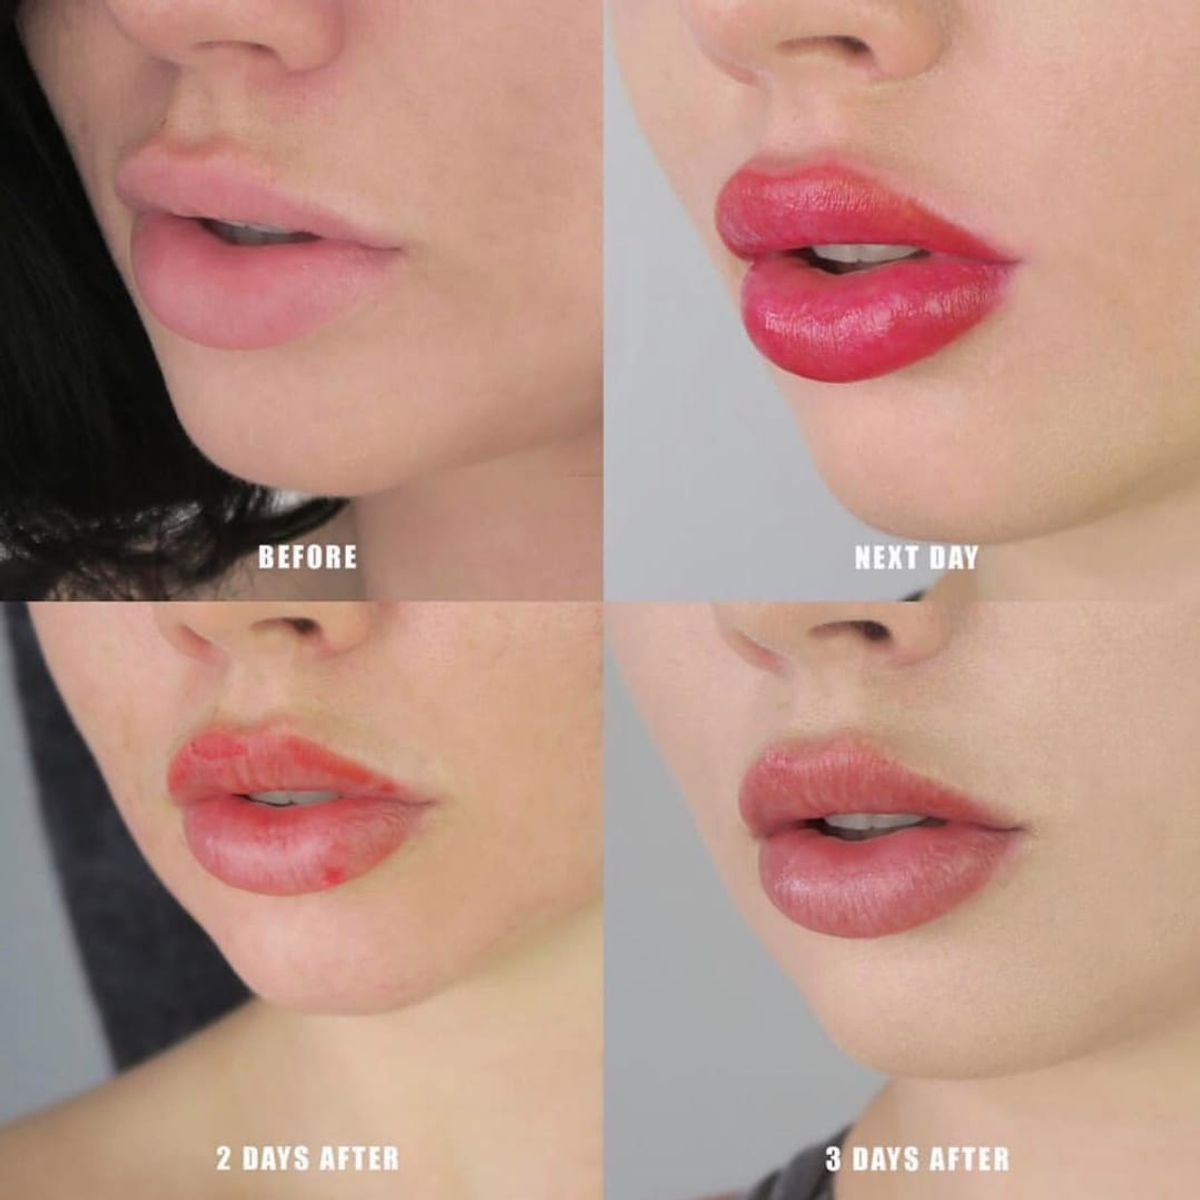 How Long Does Lip Blushing Take To Heal? 